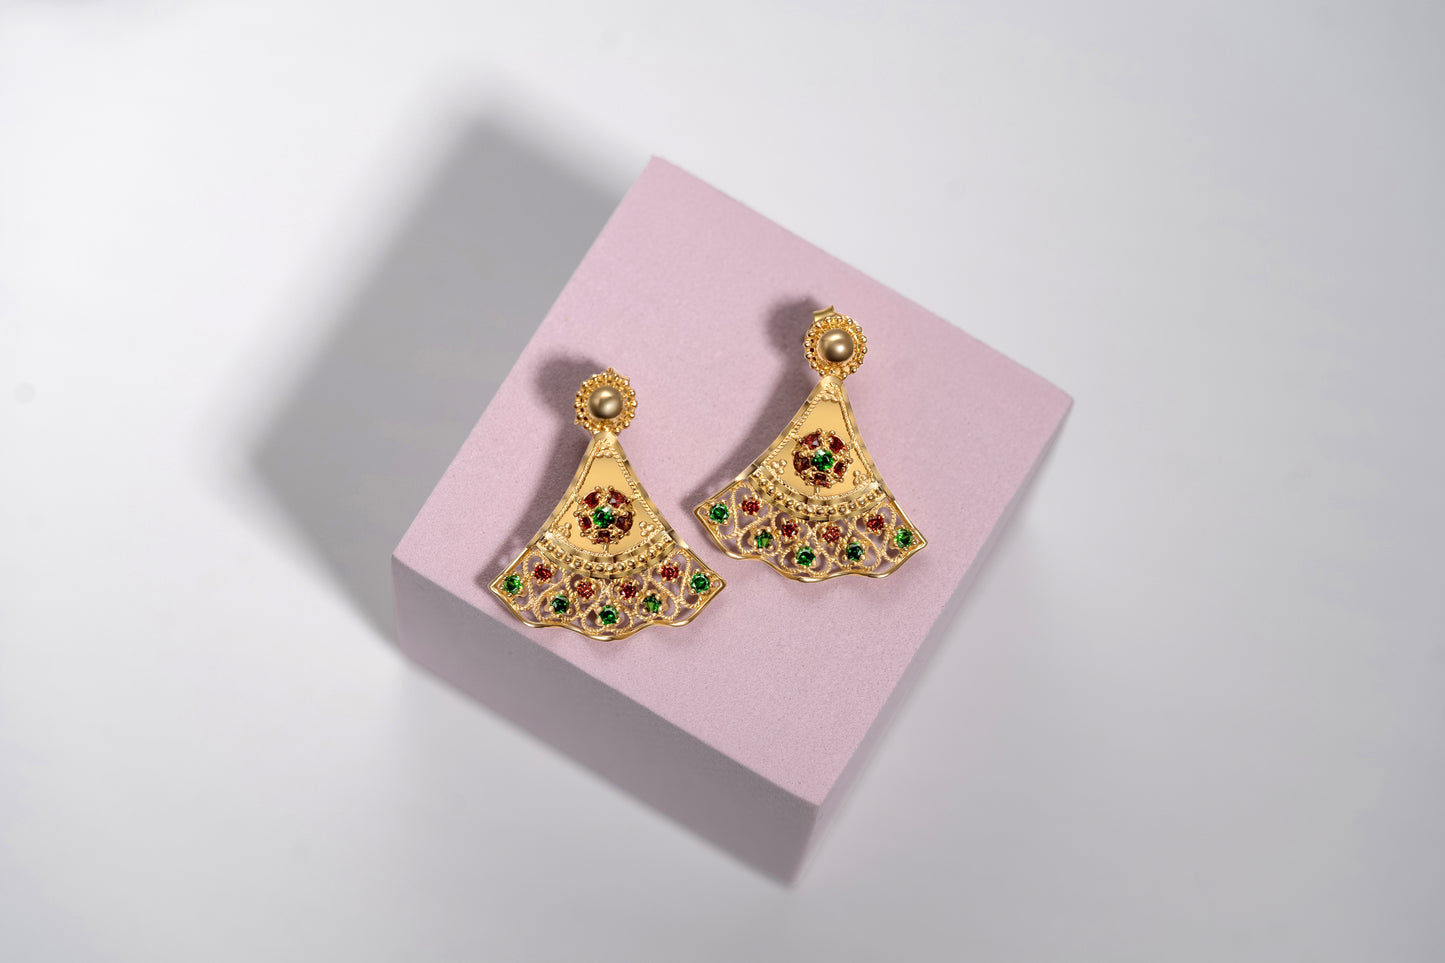 Turath Collection: 21k Fan Earrings - Colorful